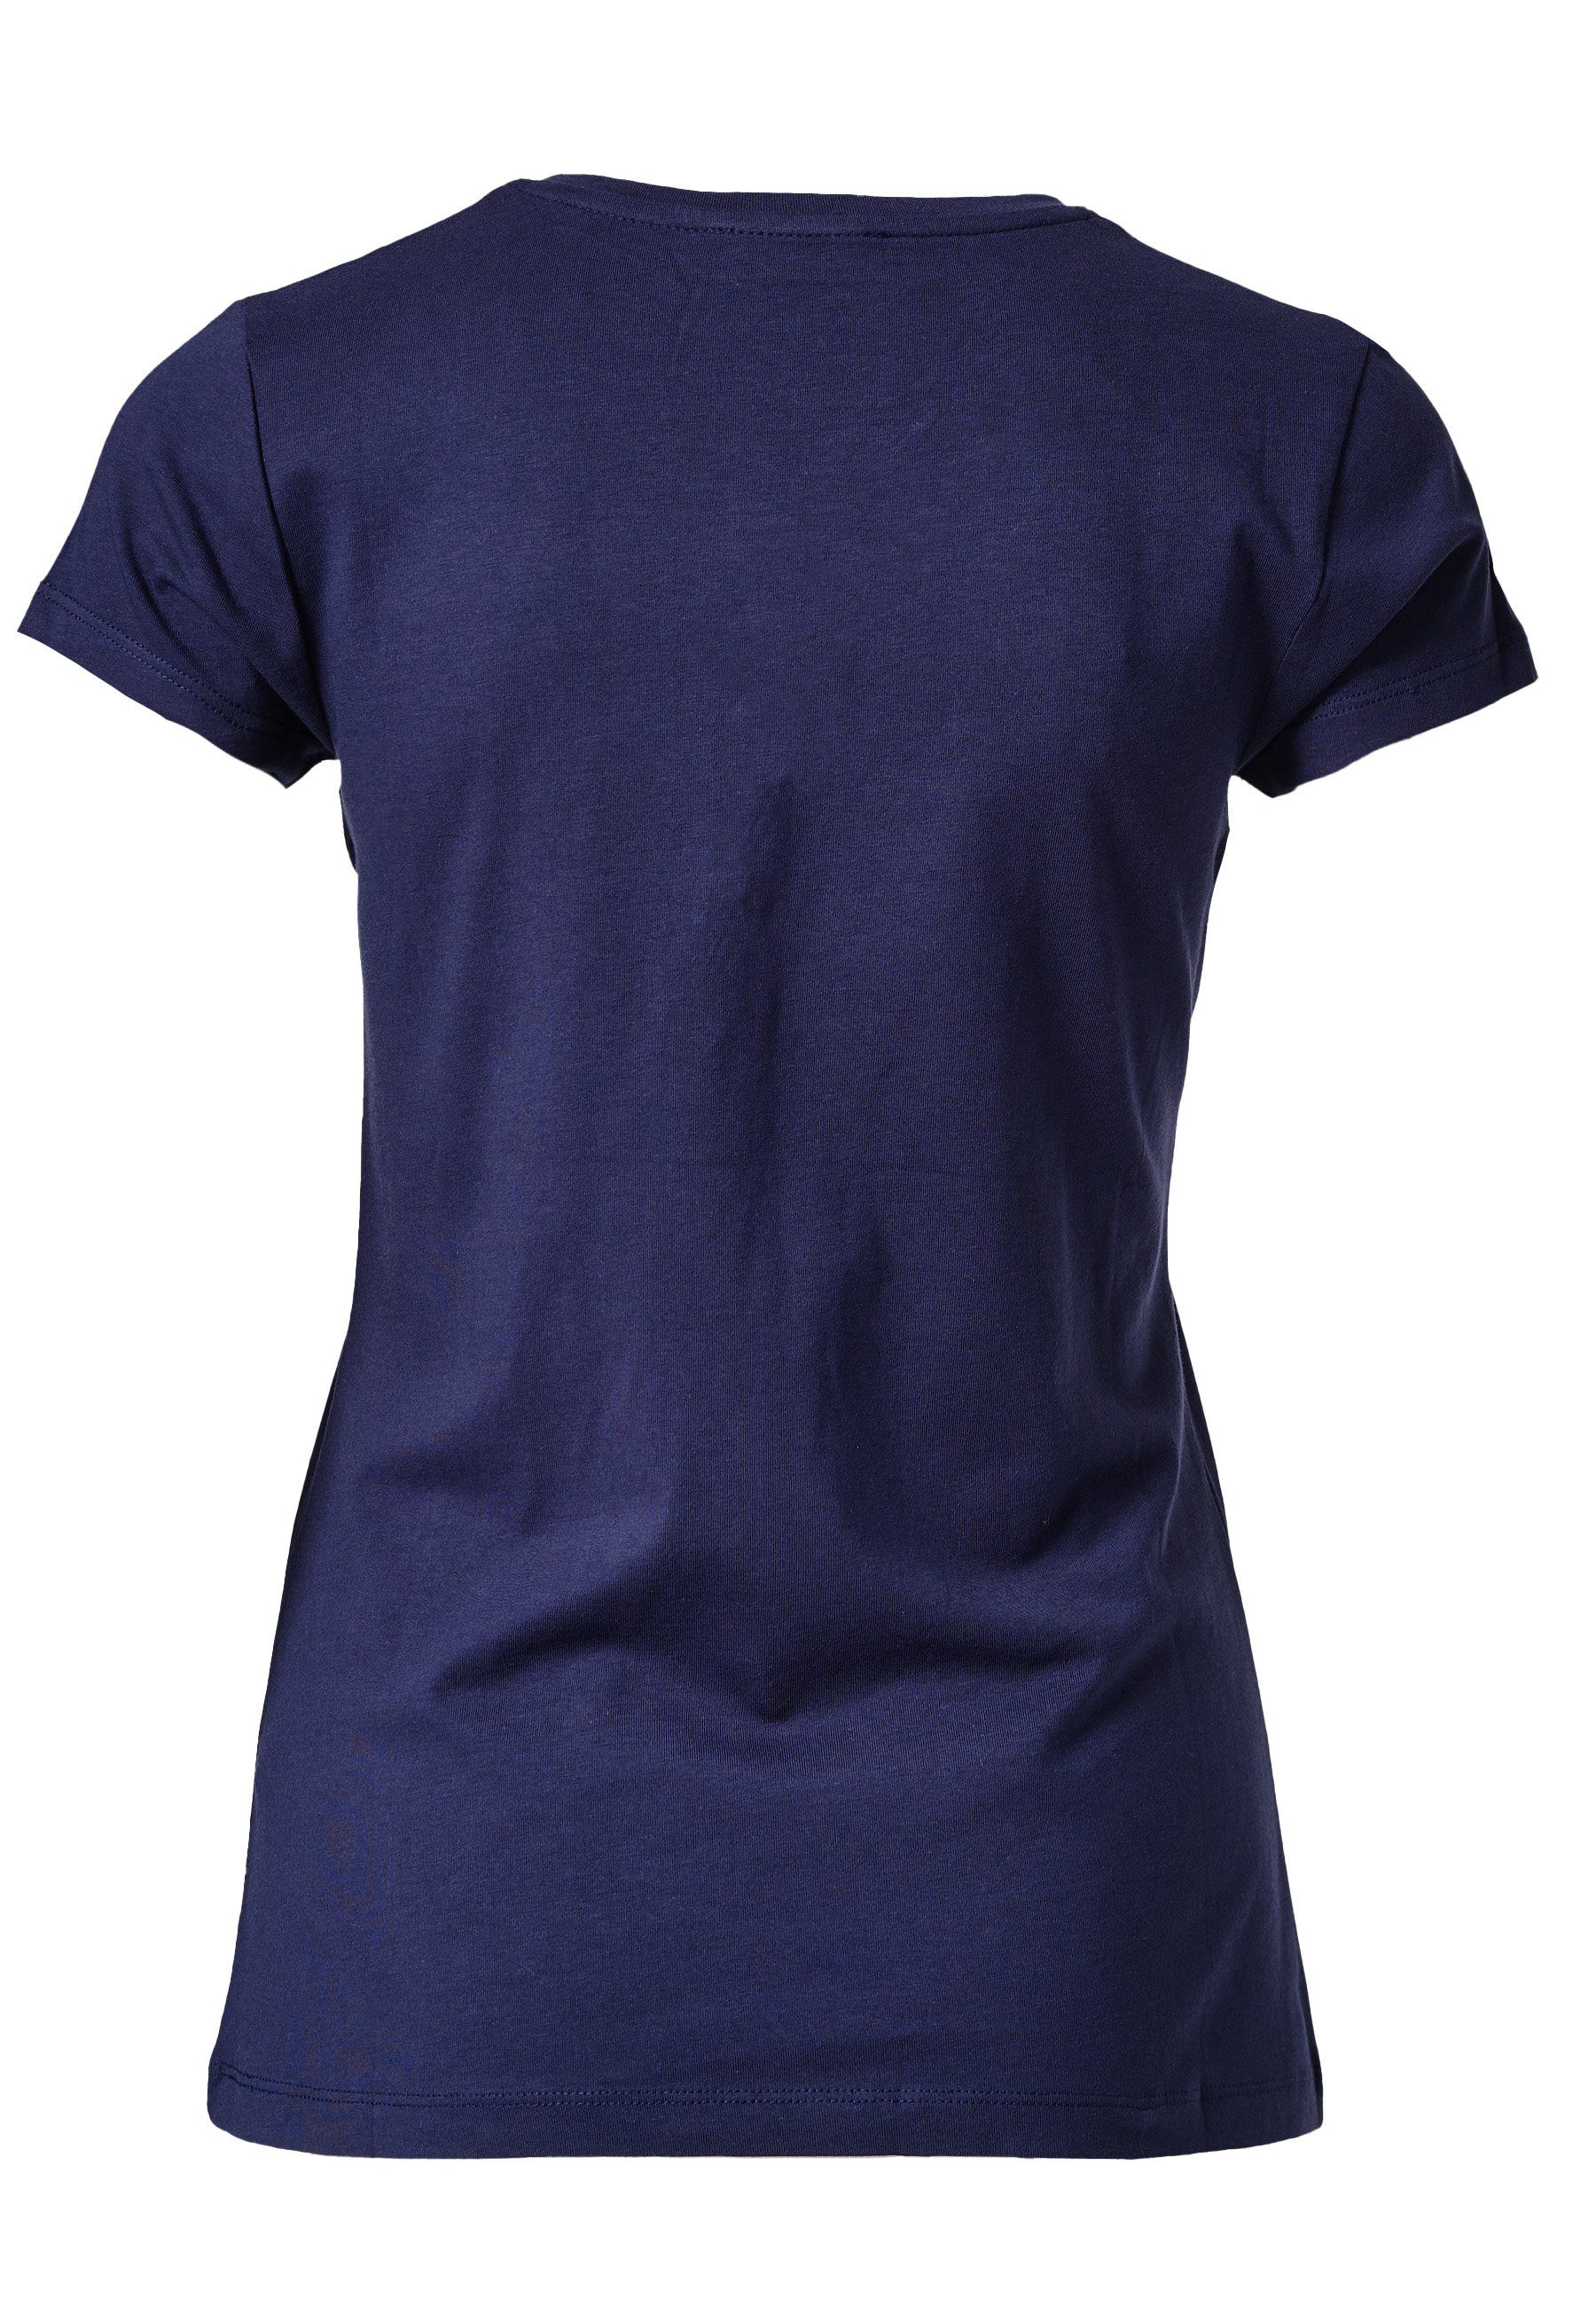 Decay T-Shirt blau mit Front-Print